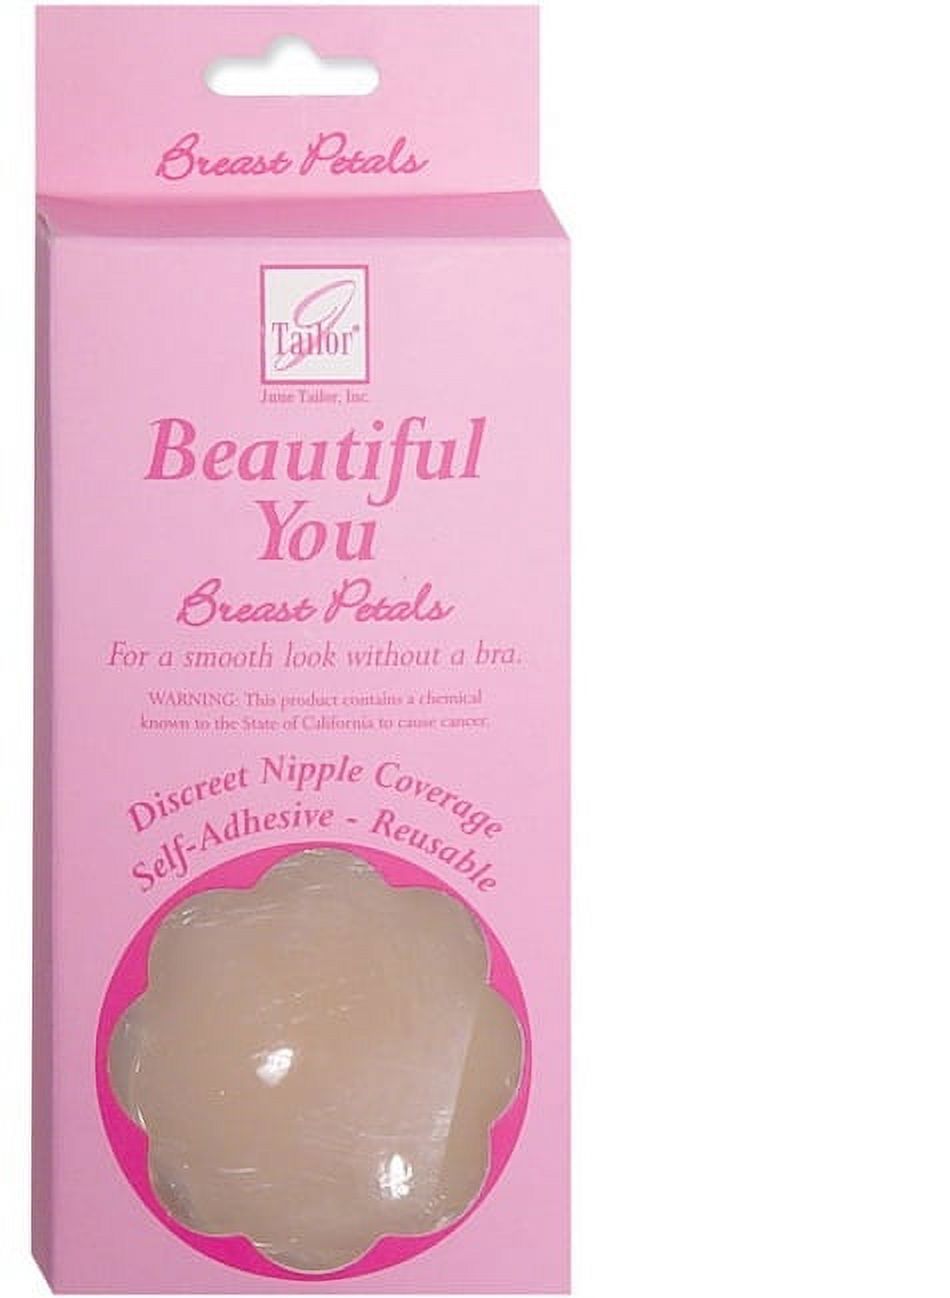 June Tailor Beautiful You Breast Petals - image 2 of 3